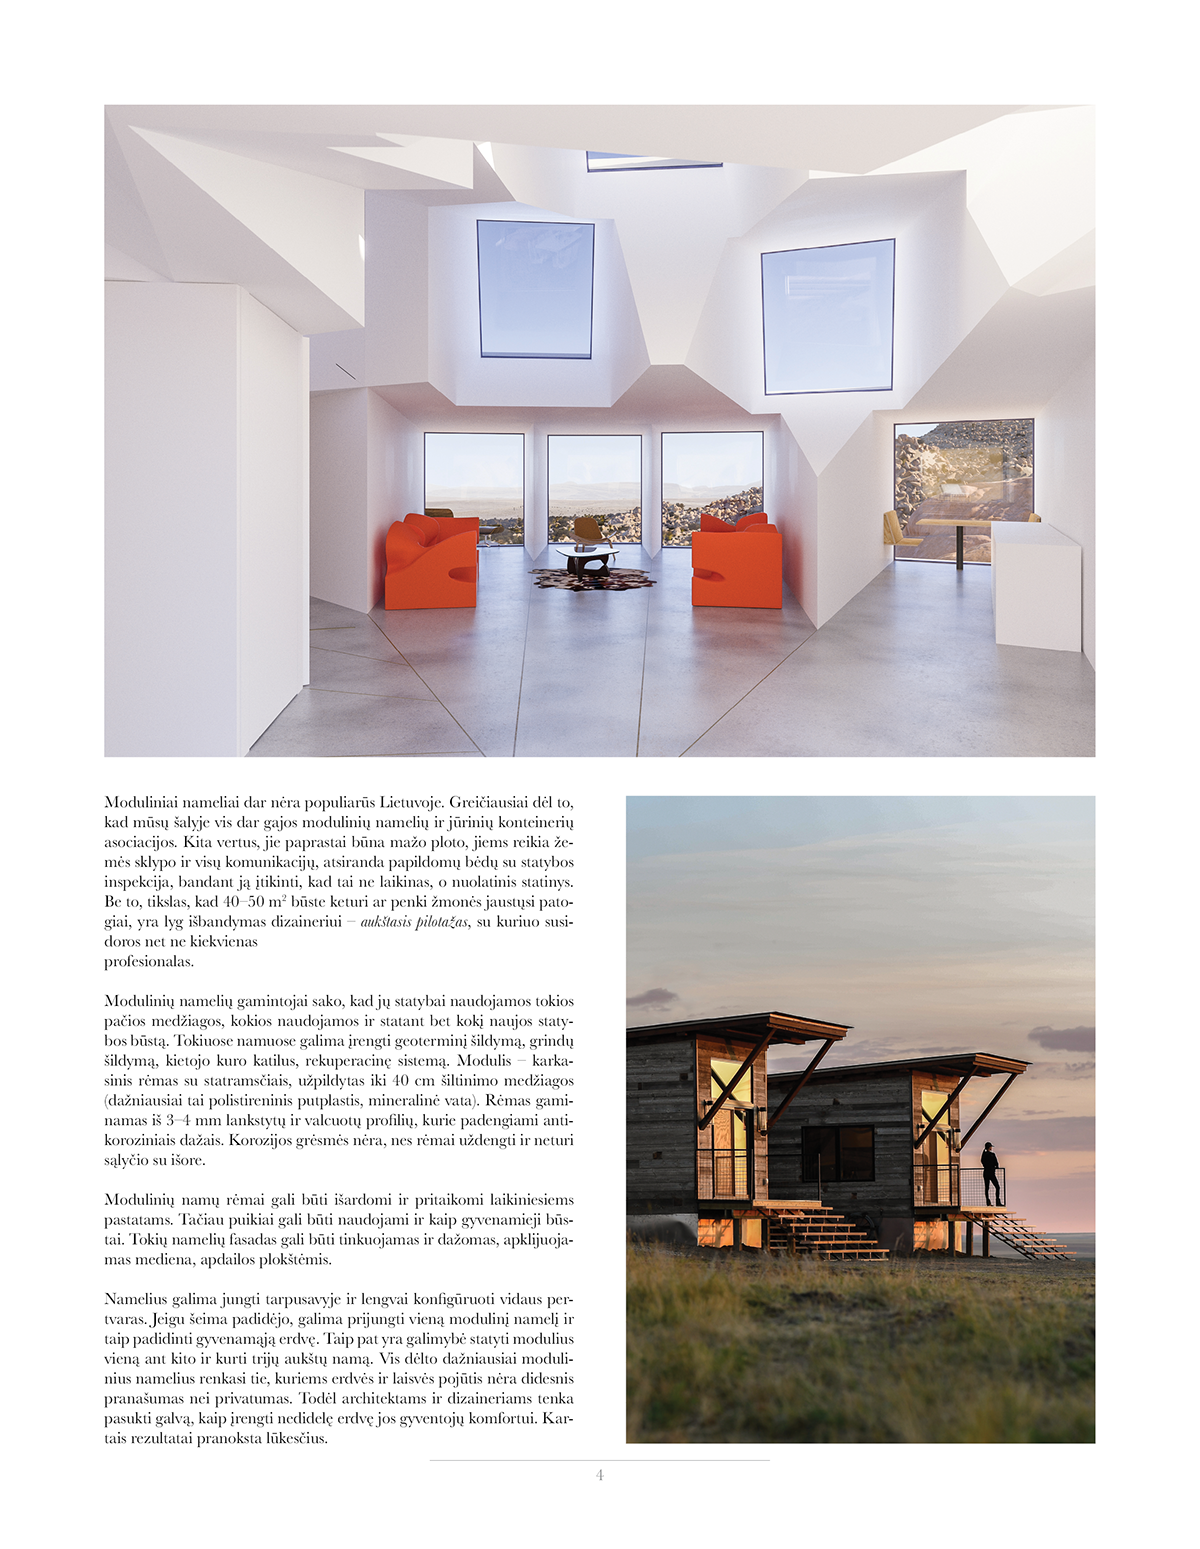 magazine journal article architecture